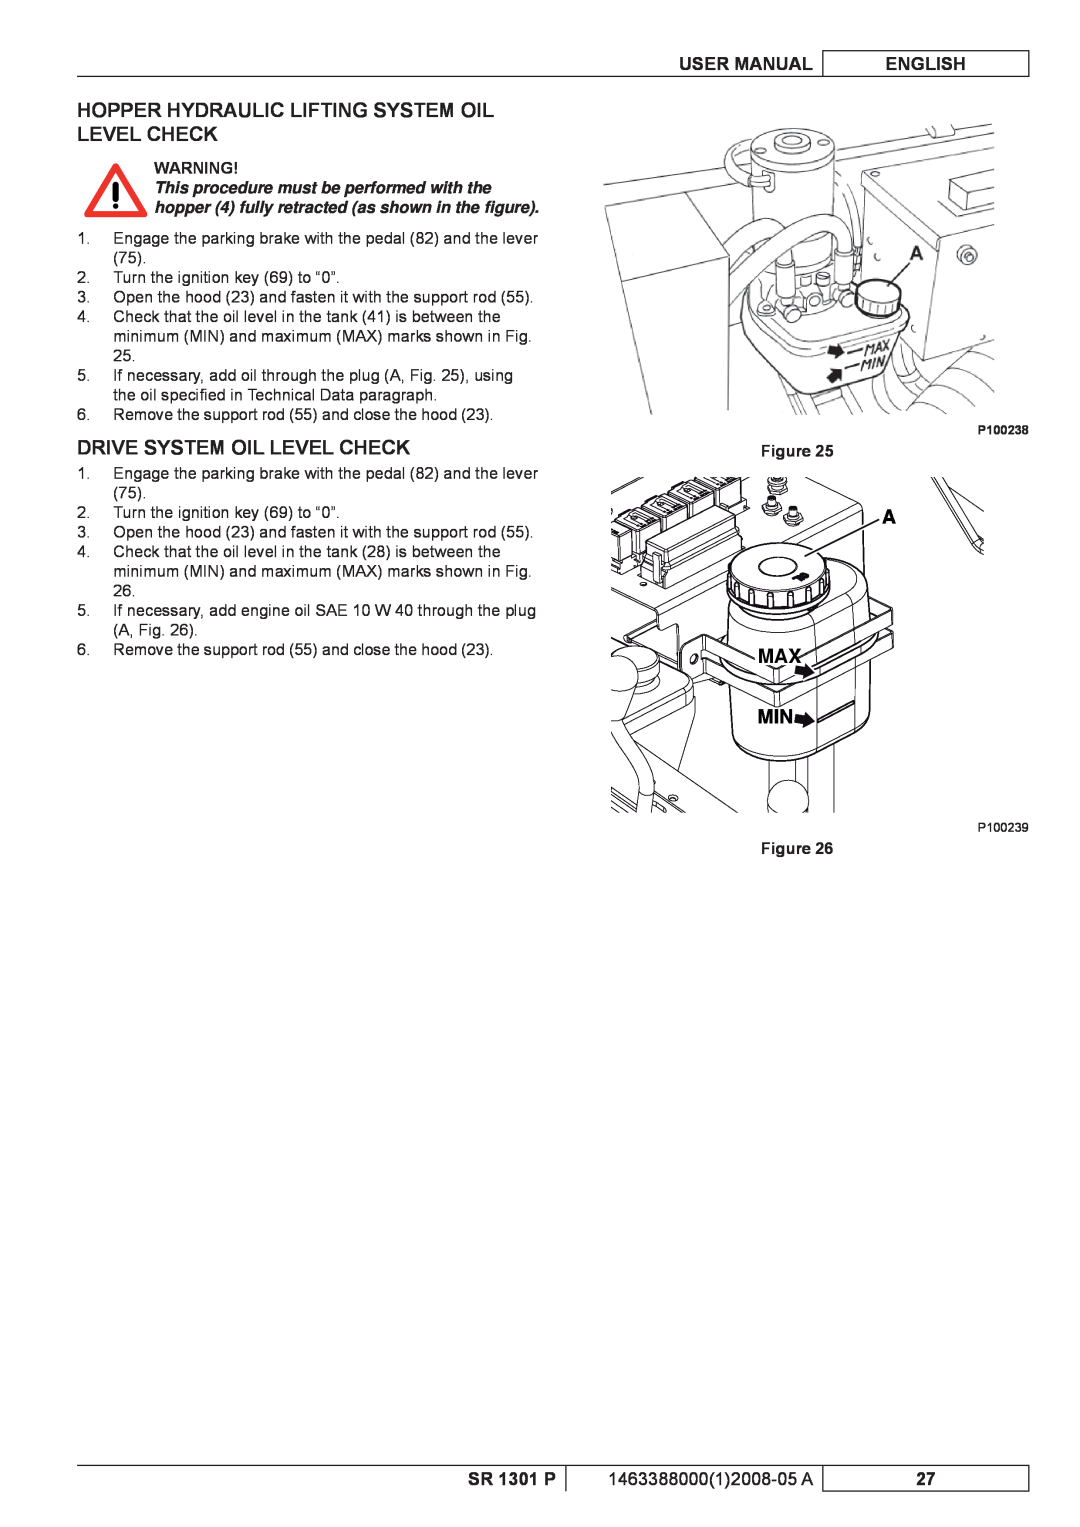 Nilfisk-ALTO SR 1301 P Hopper Hydraulic Lifting System Oil Level Check, Drive System Oil Level Check, A Max Min, English 